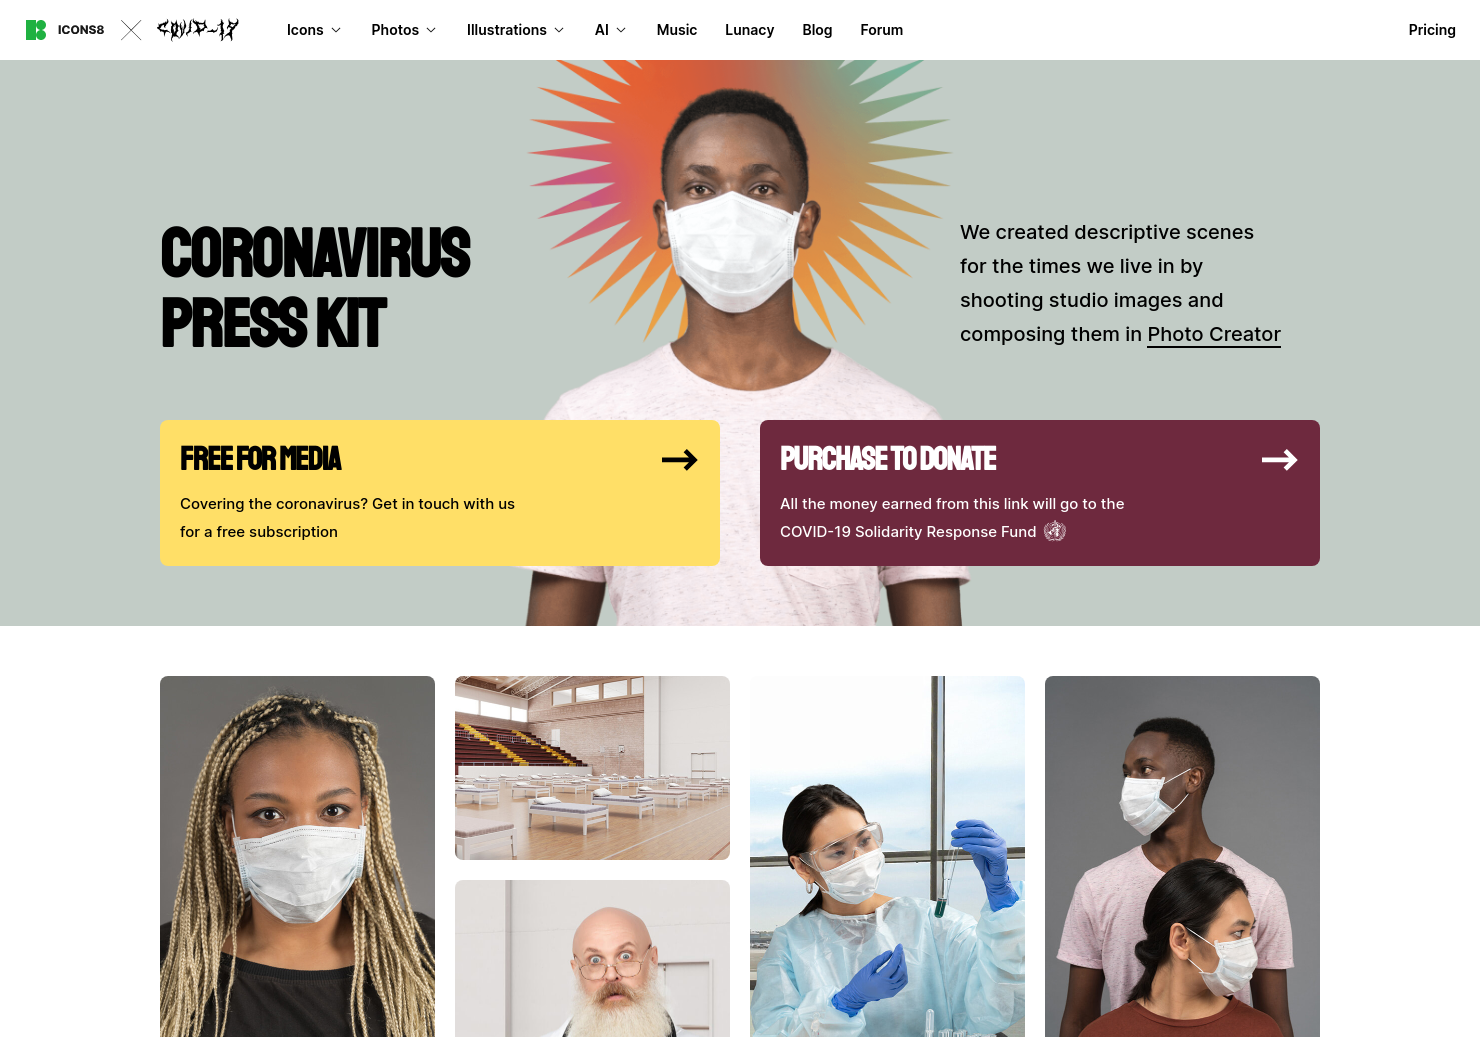 Coronavirus Press Kit